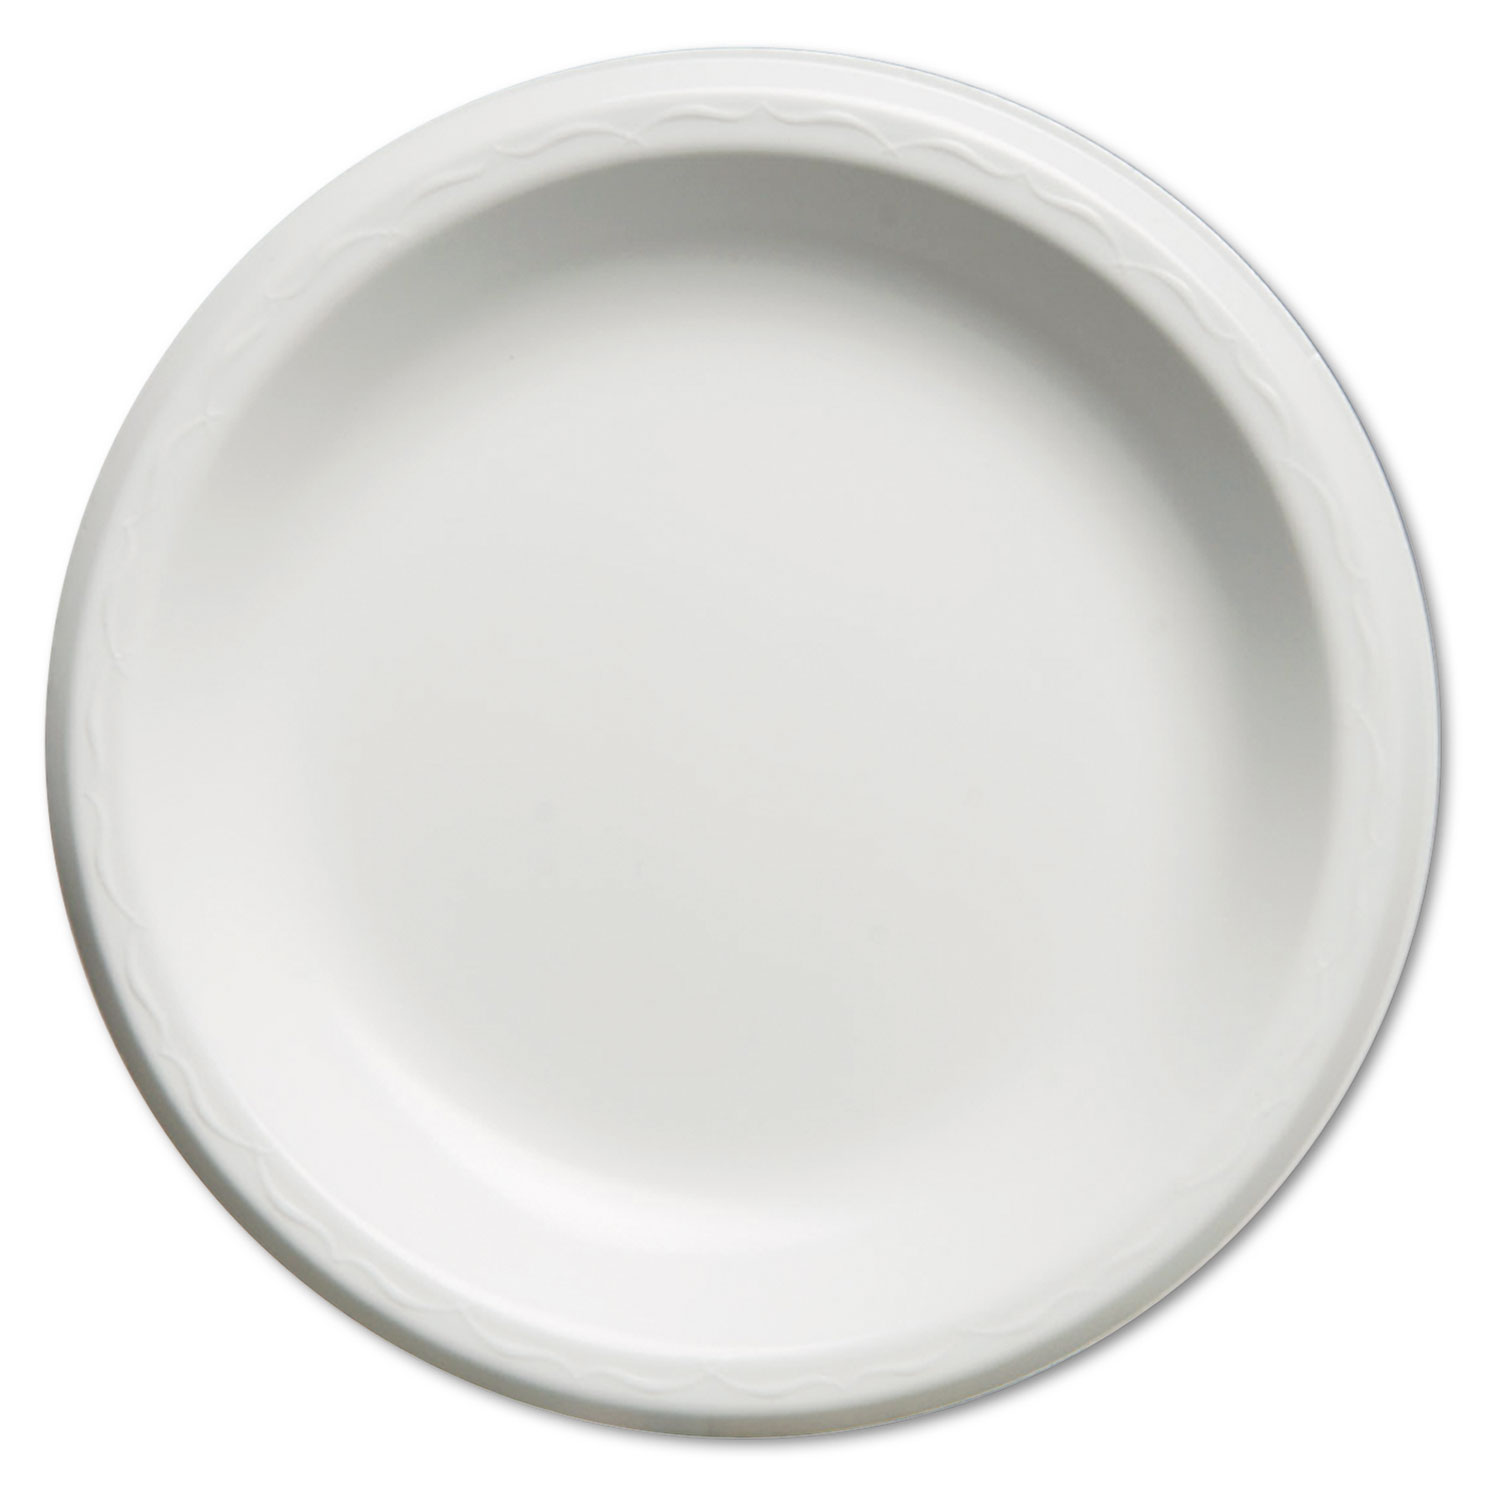  Genpak LAM09--- Elite Laminated Foam Plates, 8.88 Inches, White, Round, 125/Pack, 4 Pack/Carton (GNPLAM09) 